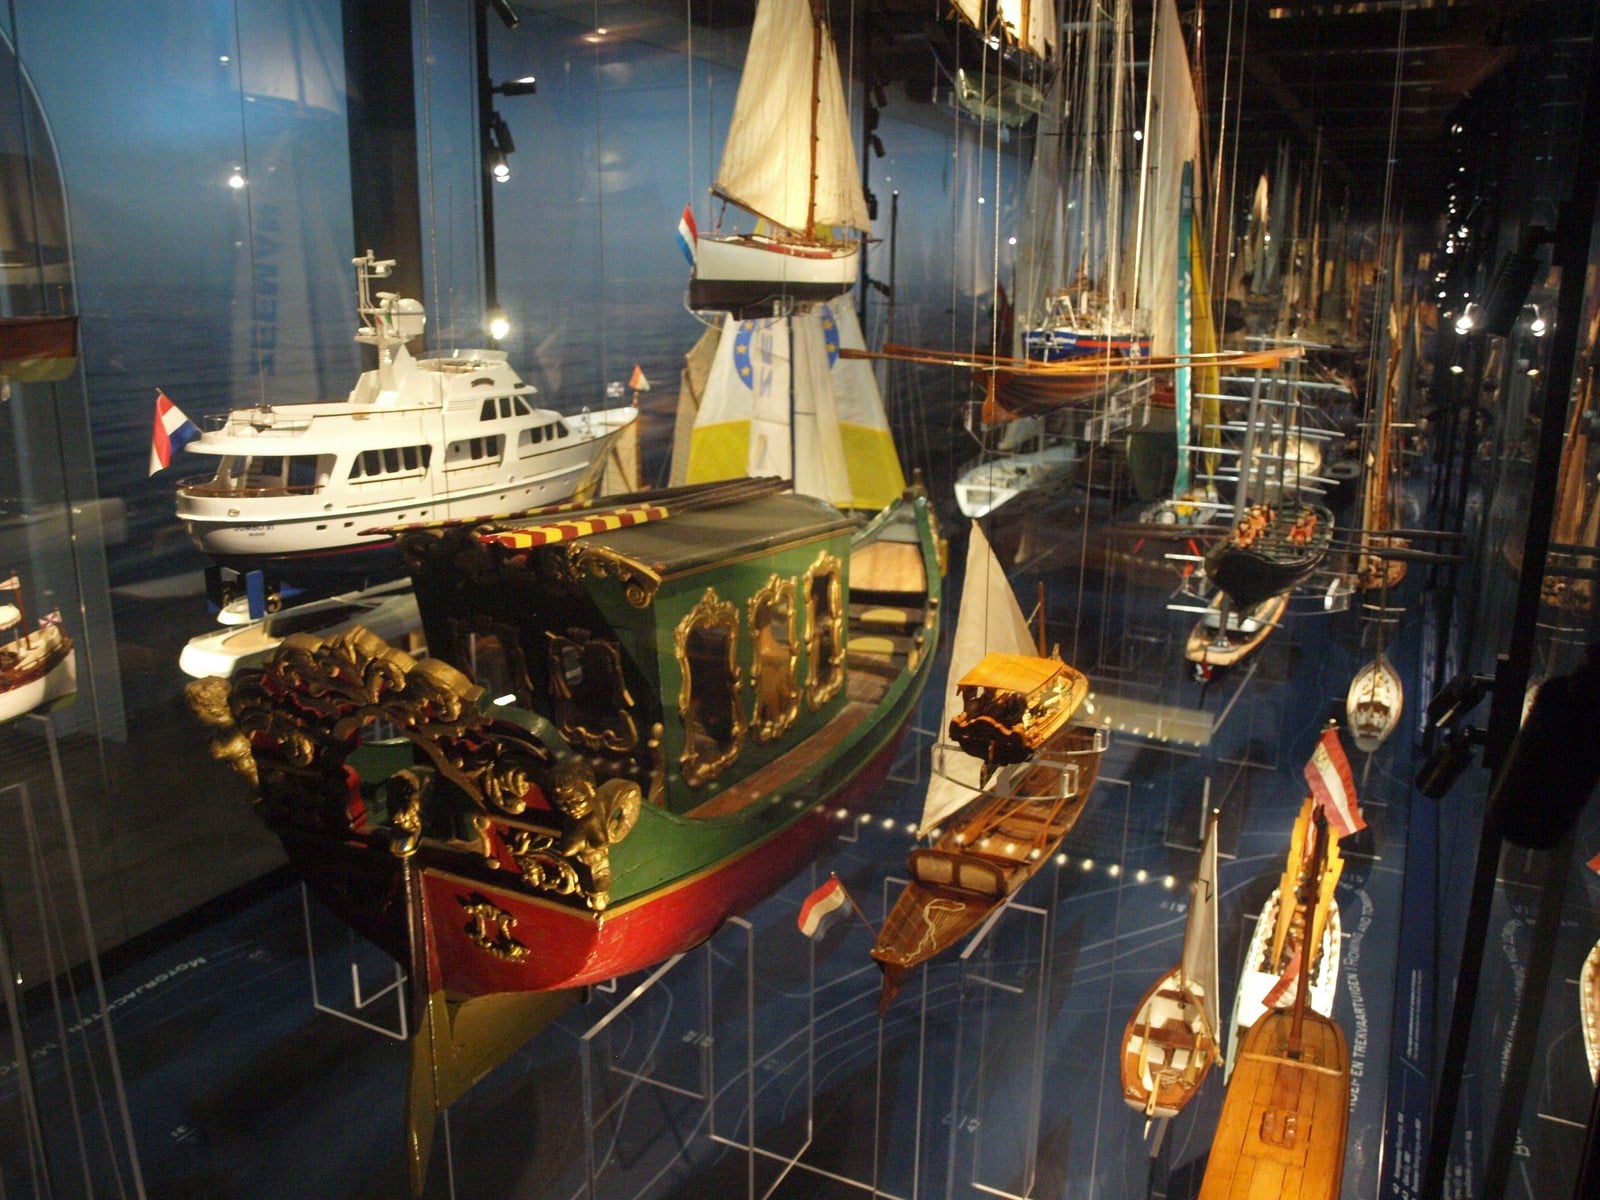 National Maritime Museum